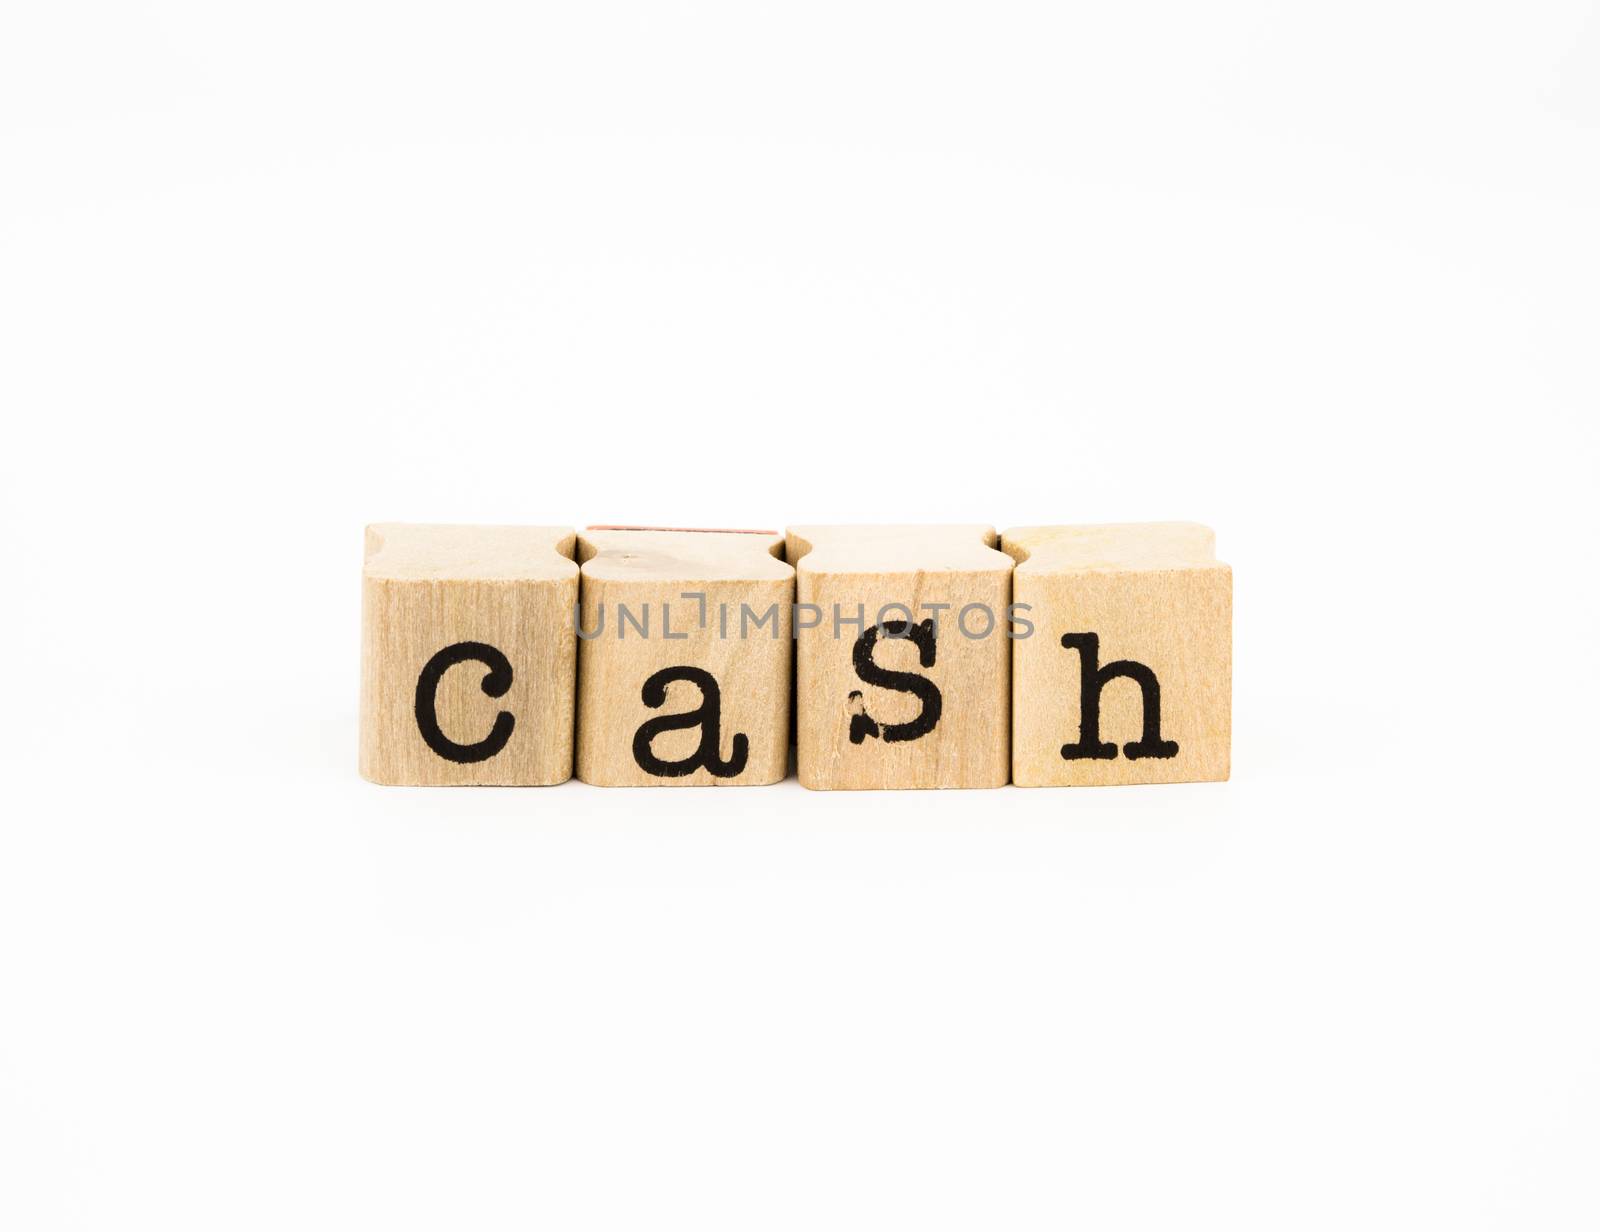 cash wording, money concept and idea by vinnstock